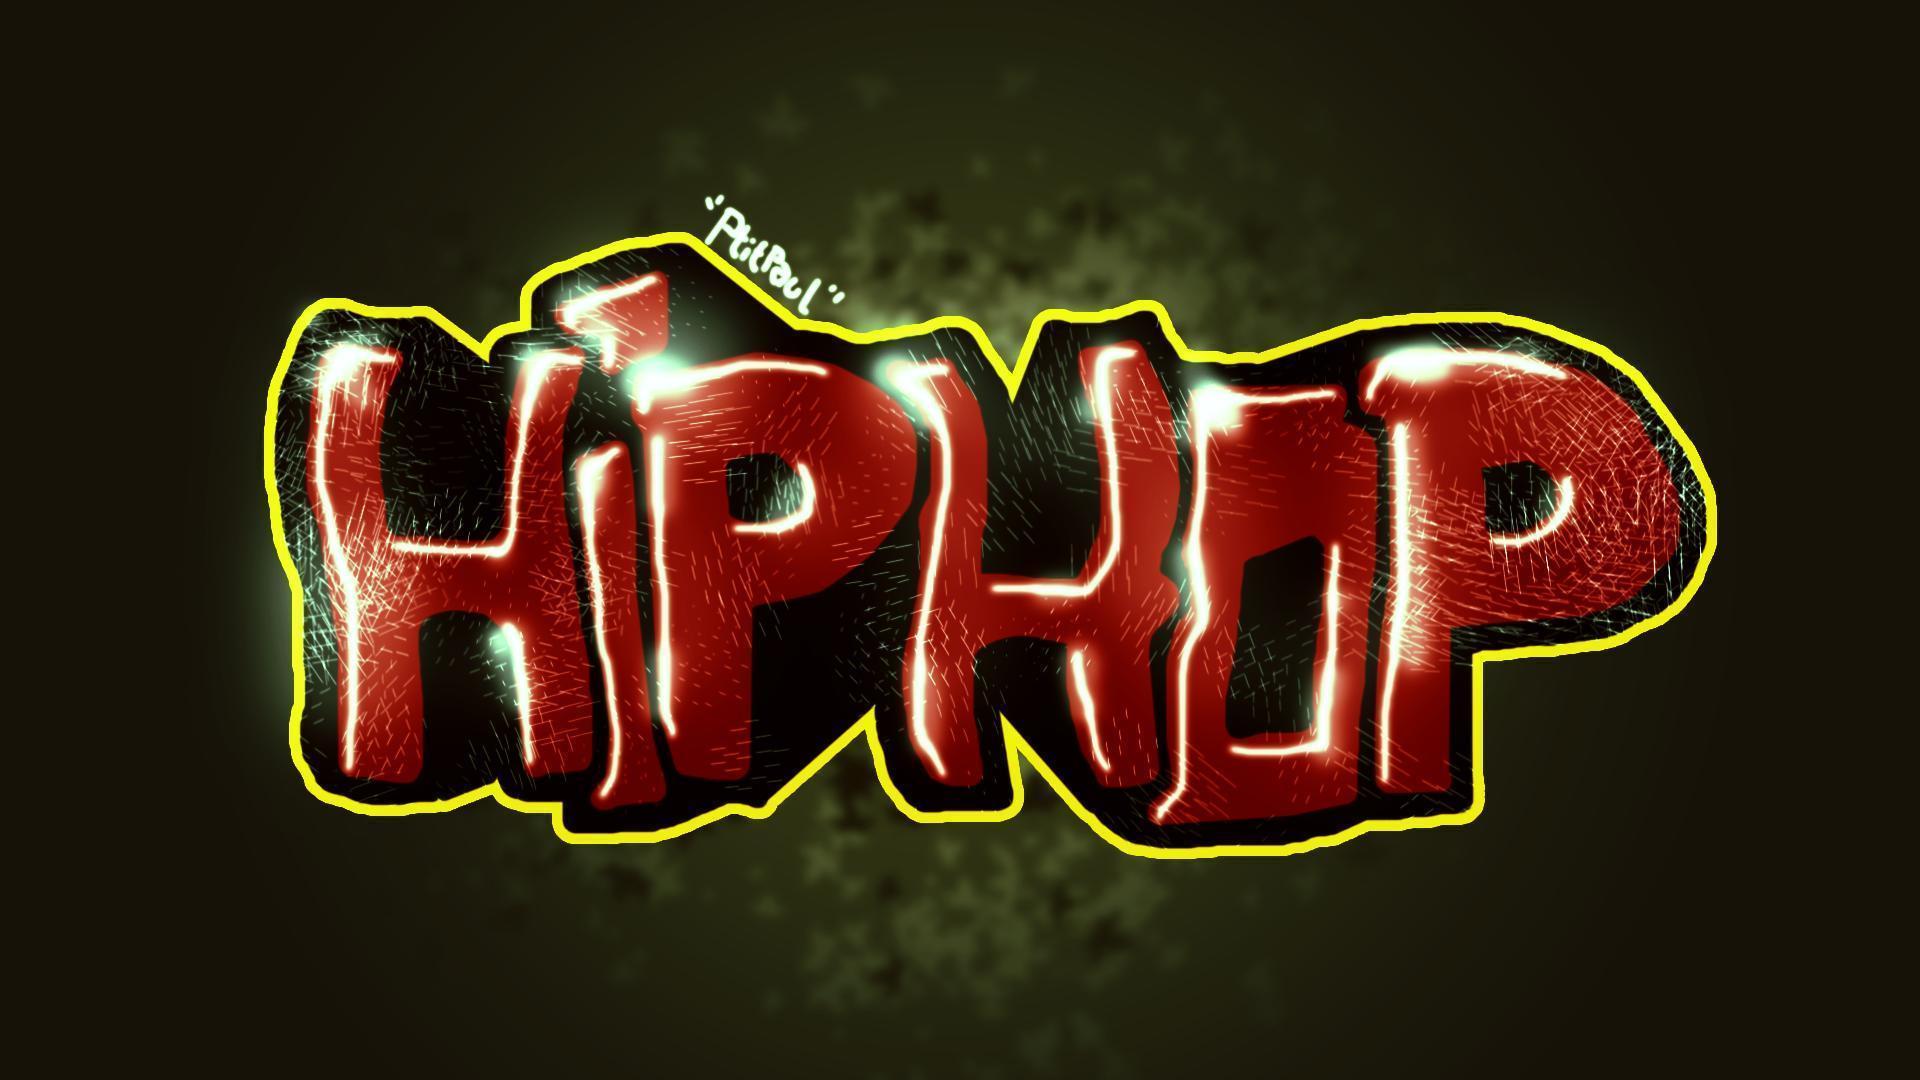 HipHop Graffiti By PtitPaulDesign. Part of Street